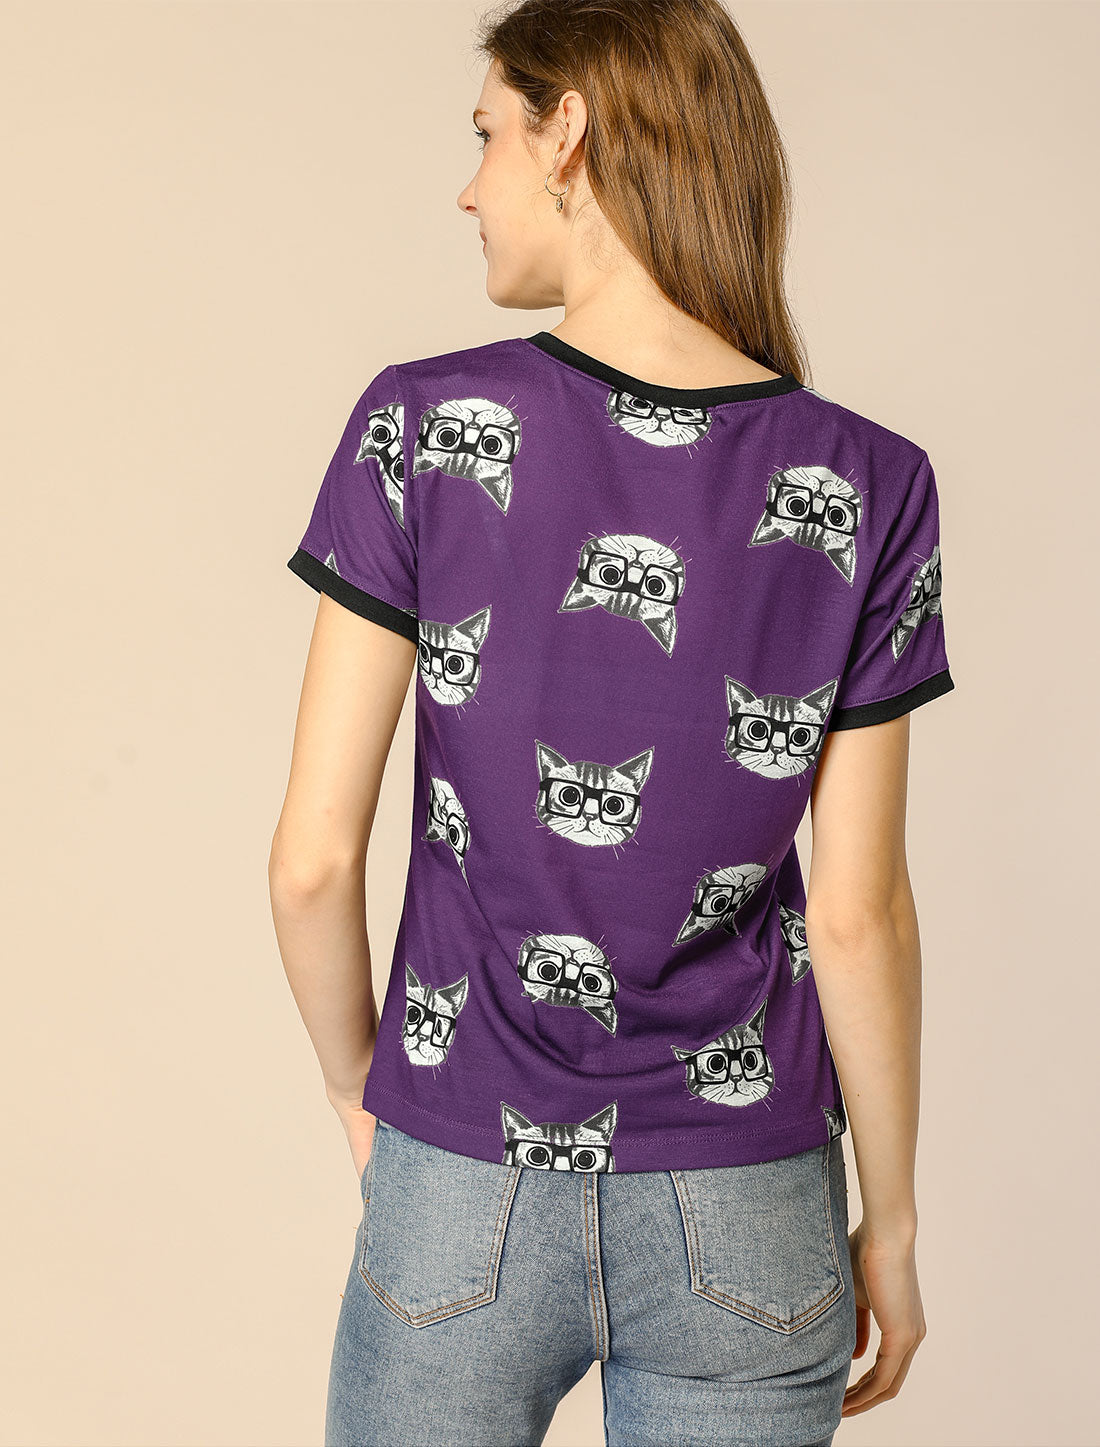 Allegra K Cat Contrast Cartoon Pet Print Tee Ringer Casual Summer T-shirt Tops